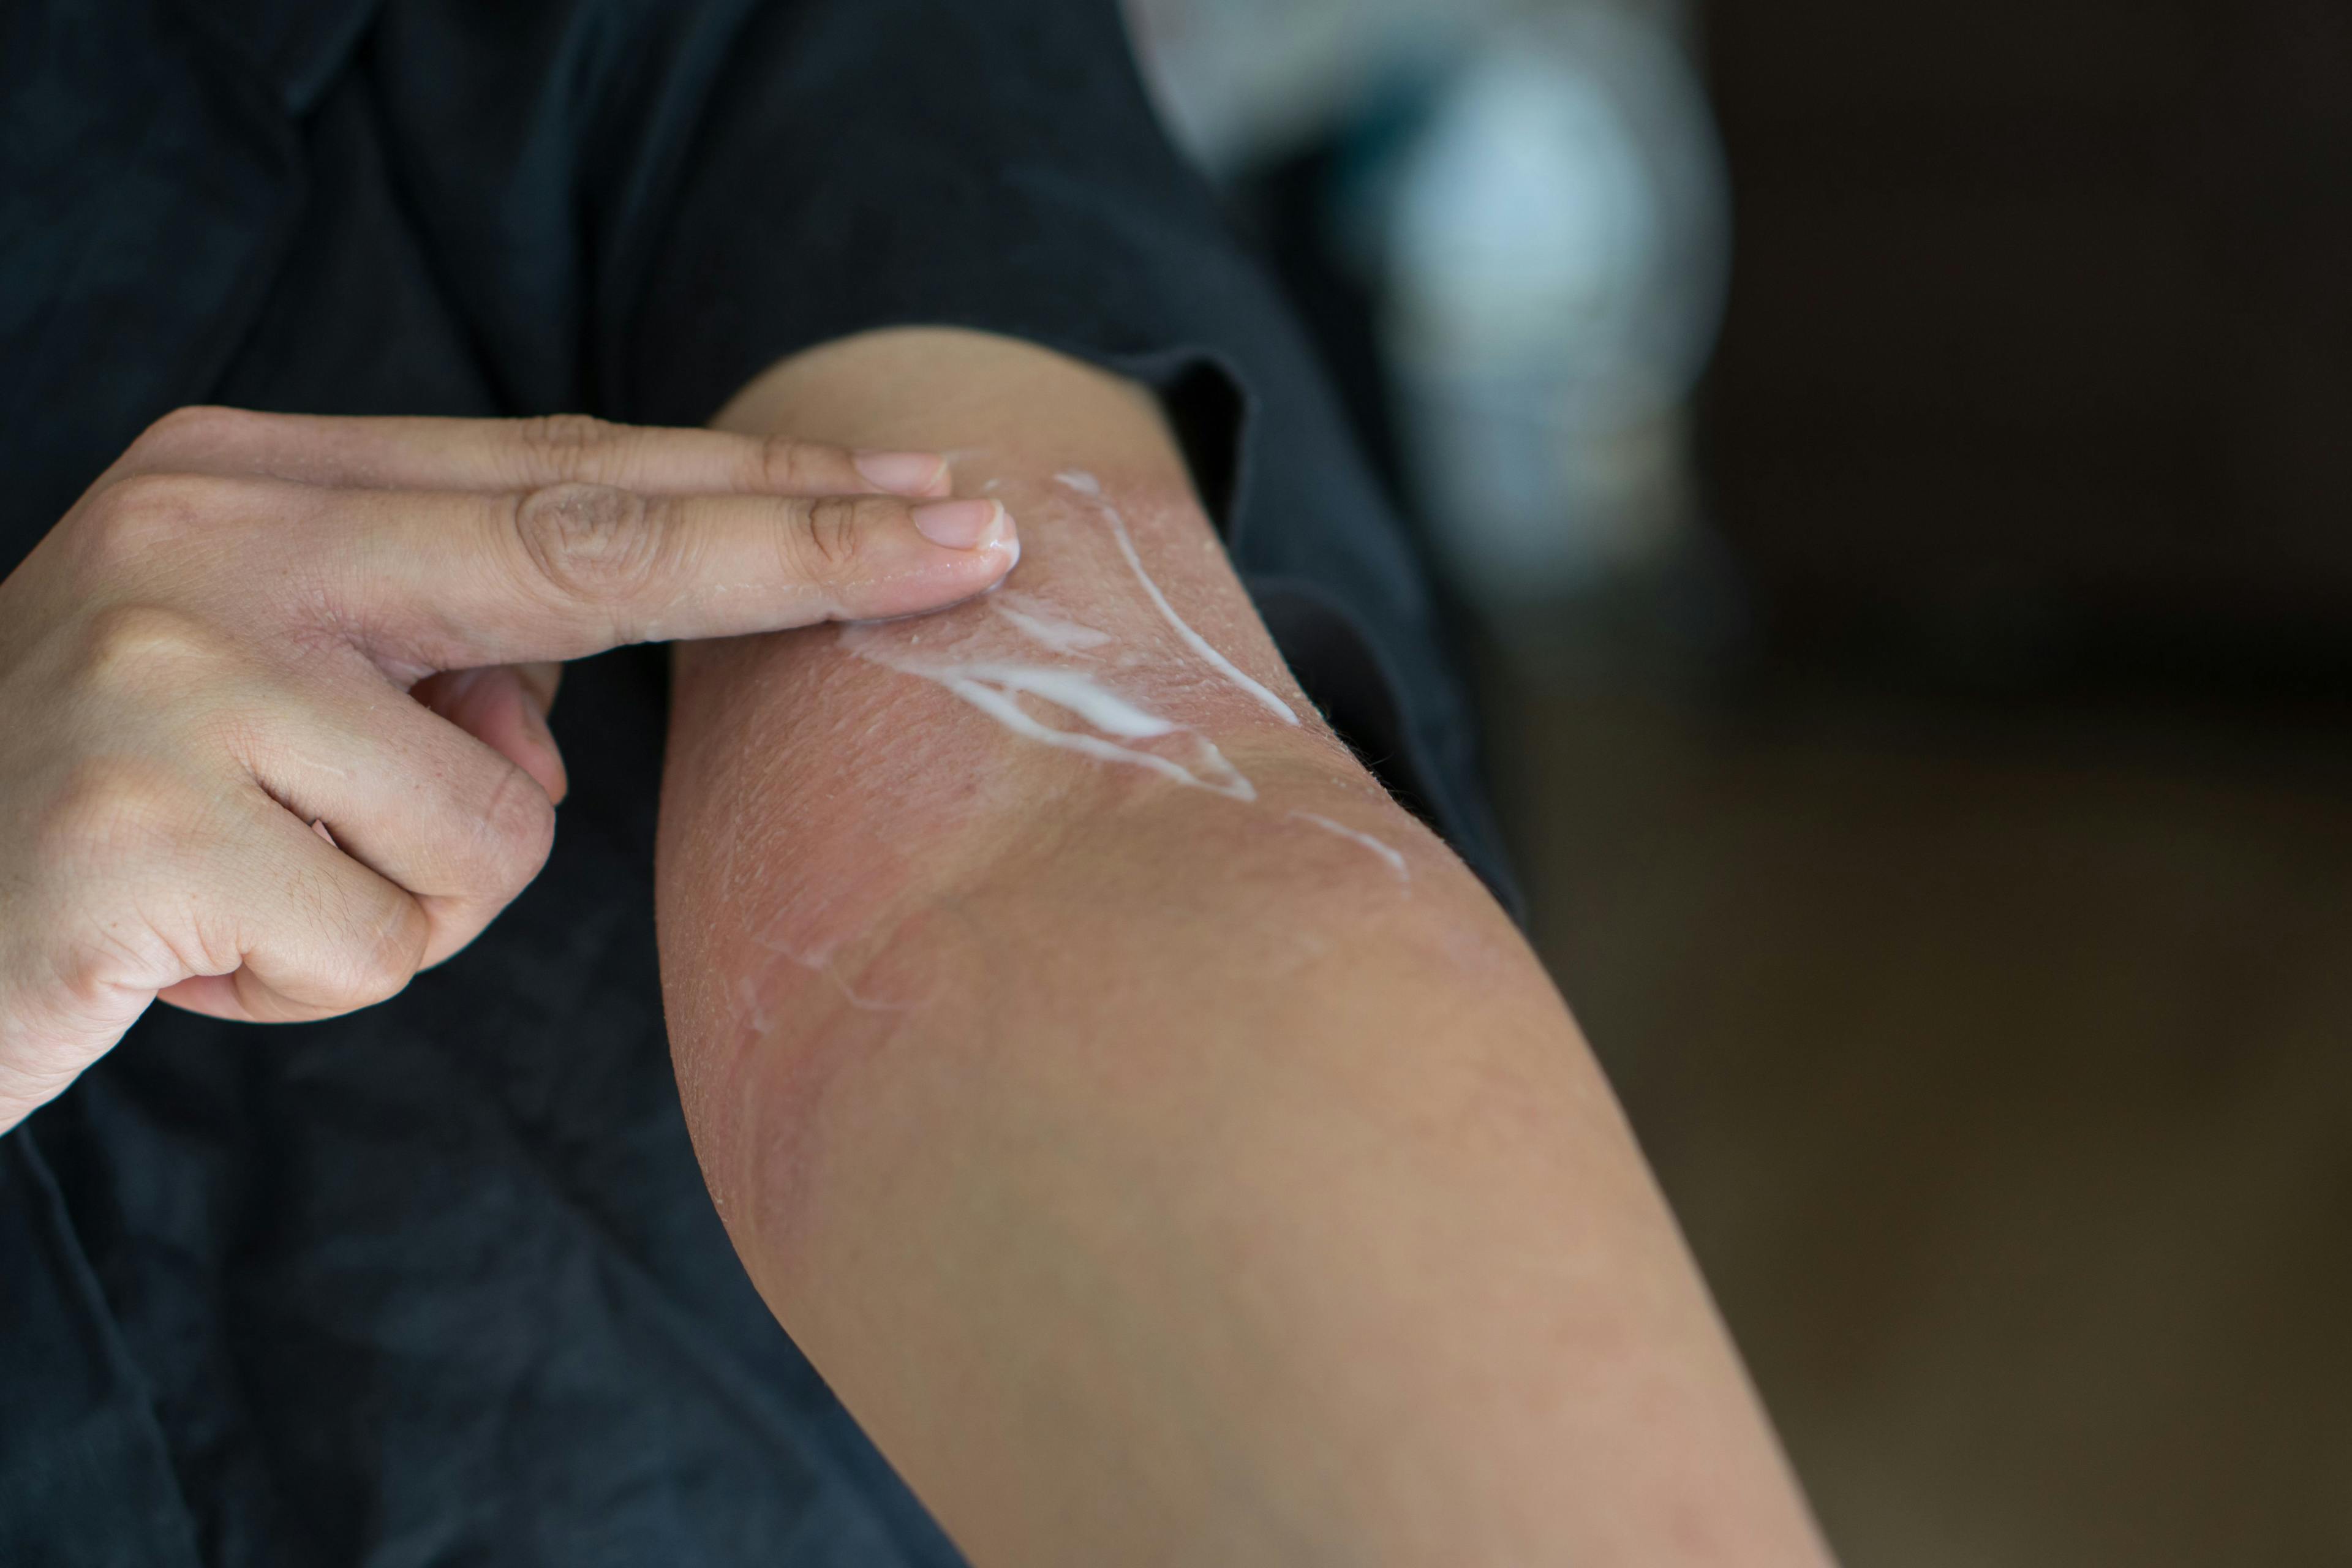 Cream applied to rash on skin | Image credit: sattahipbeach - stock.adobe.com